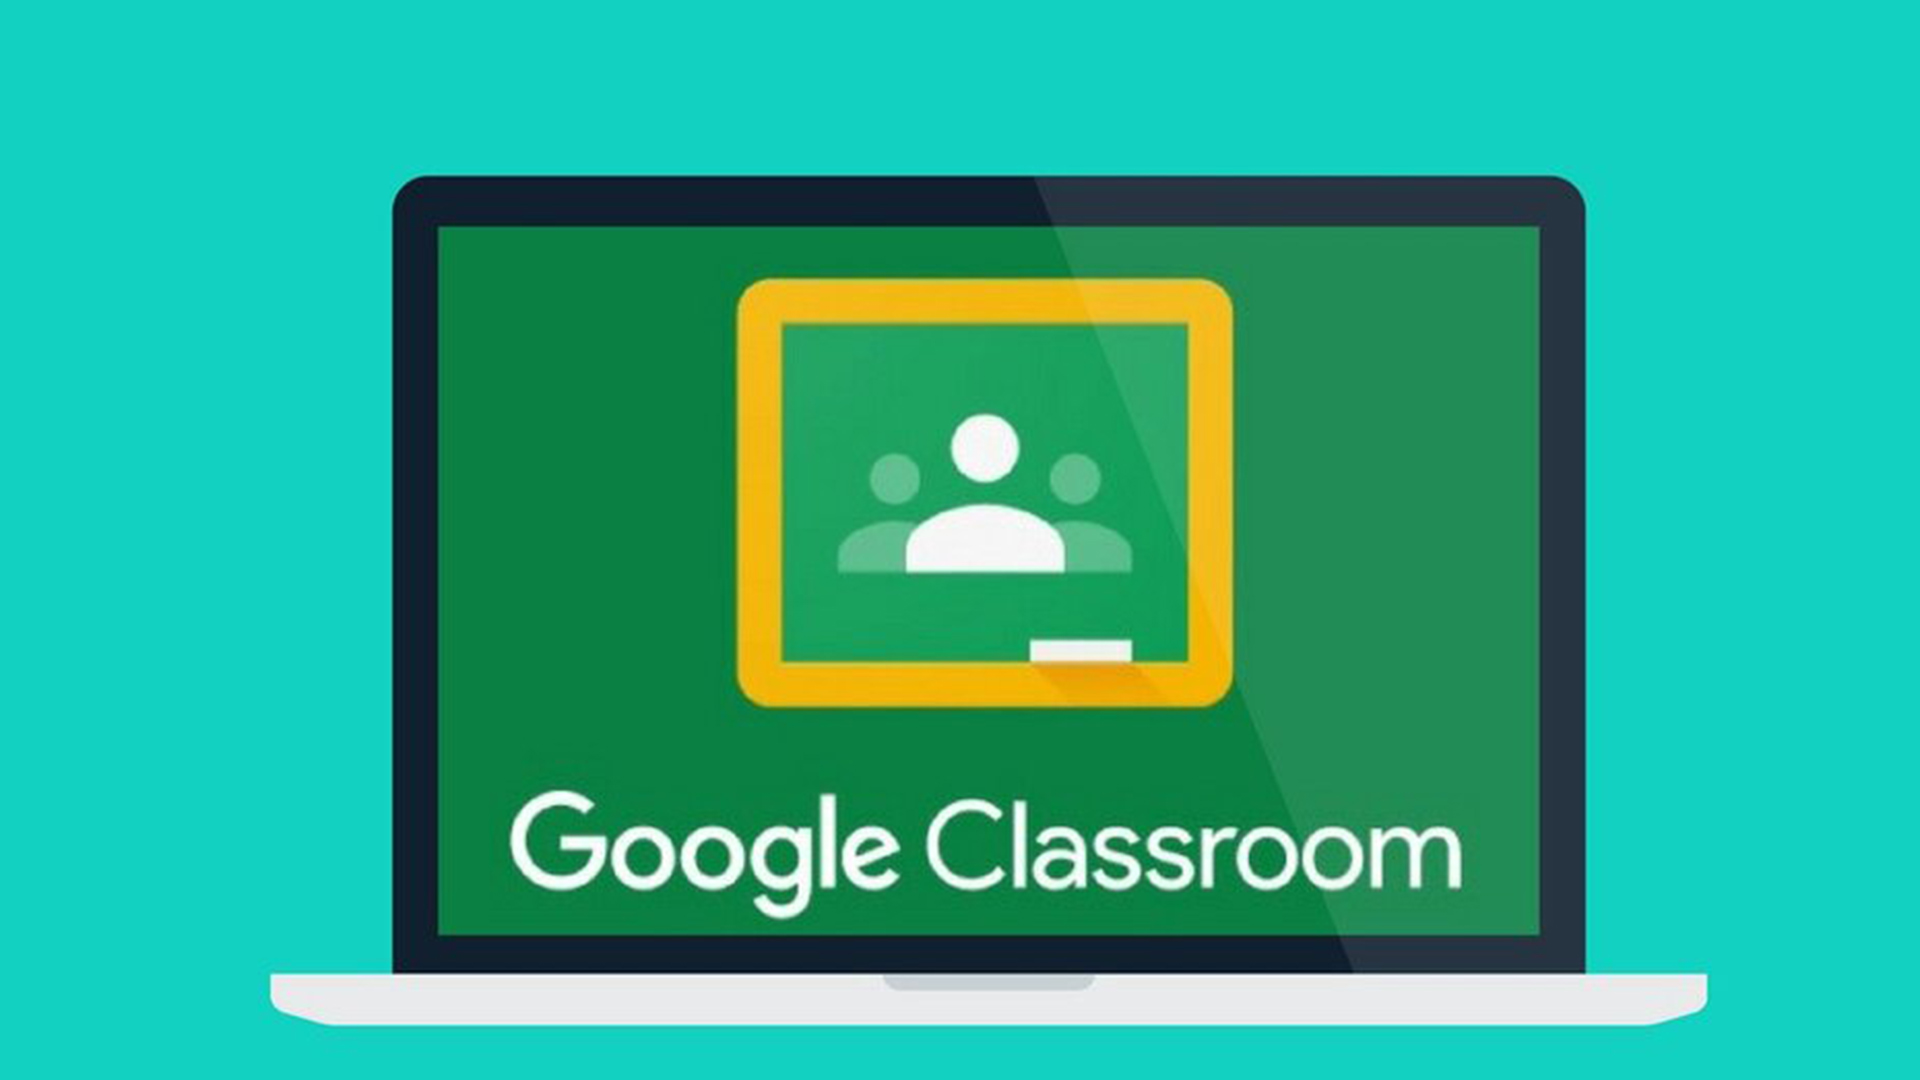 CustomGuide - Google Classroom for Teachers